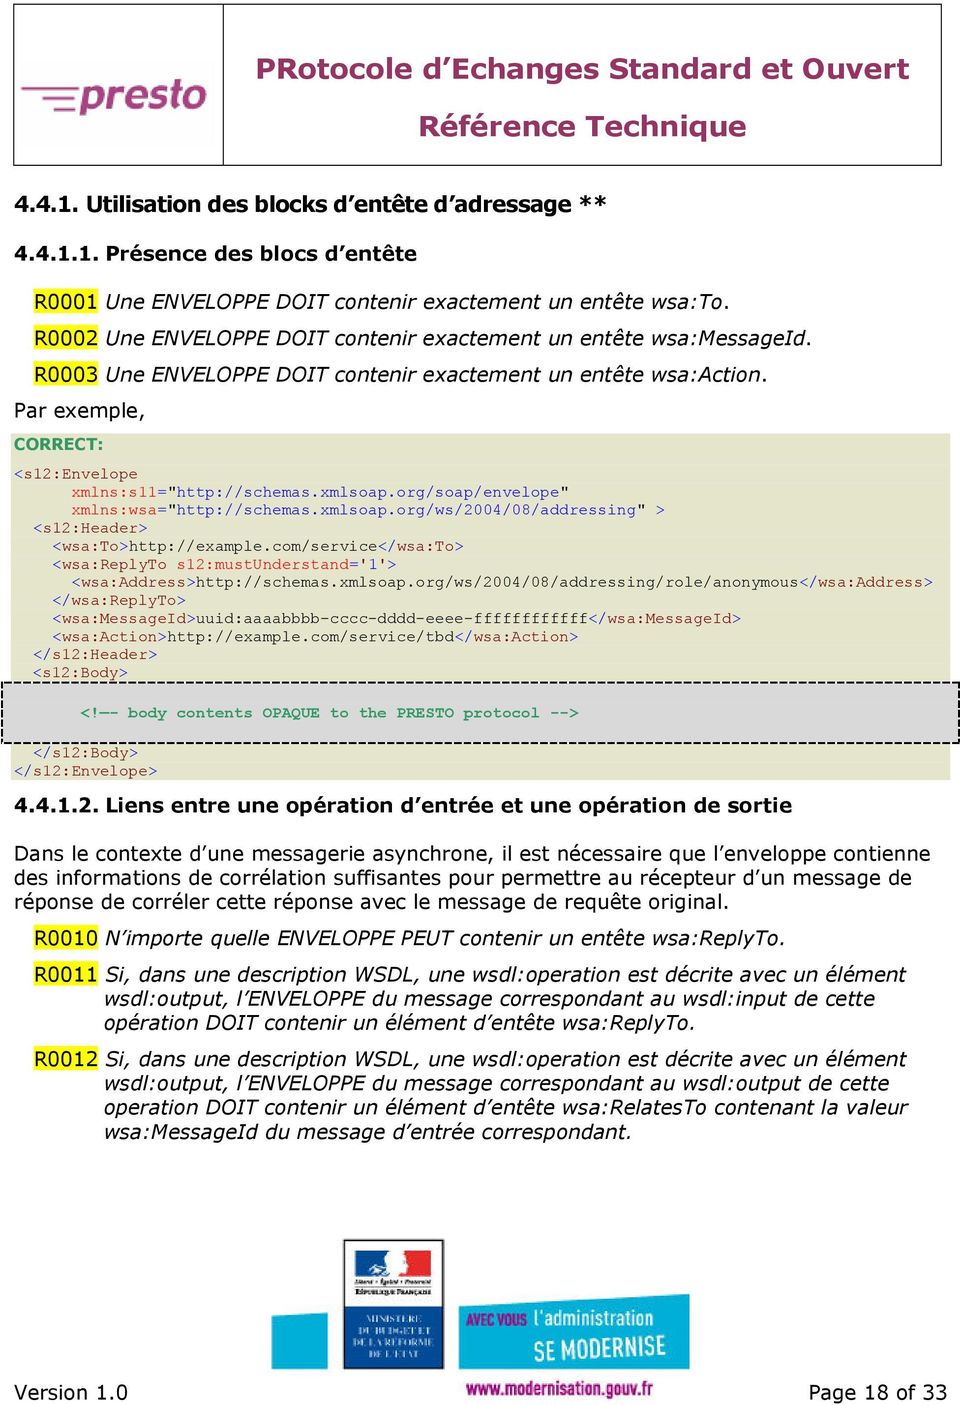 xmlsoap.org/soap/envelope" xmlns:wsa="http://schemas.xmlsoap.org/ws/2004/08/addressing" > <s12:header> <wsa:to>http://example.